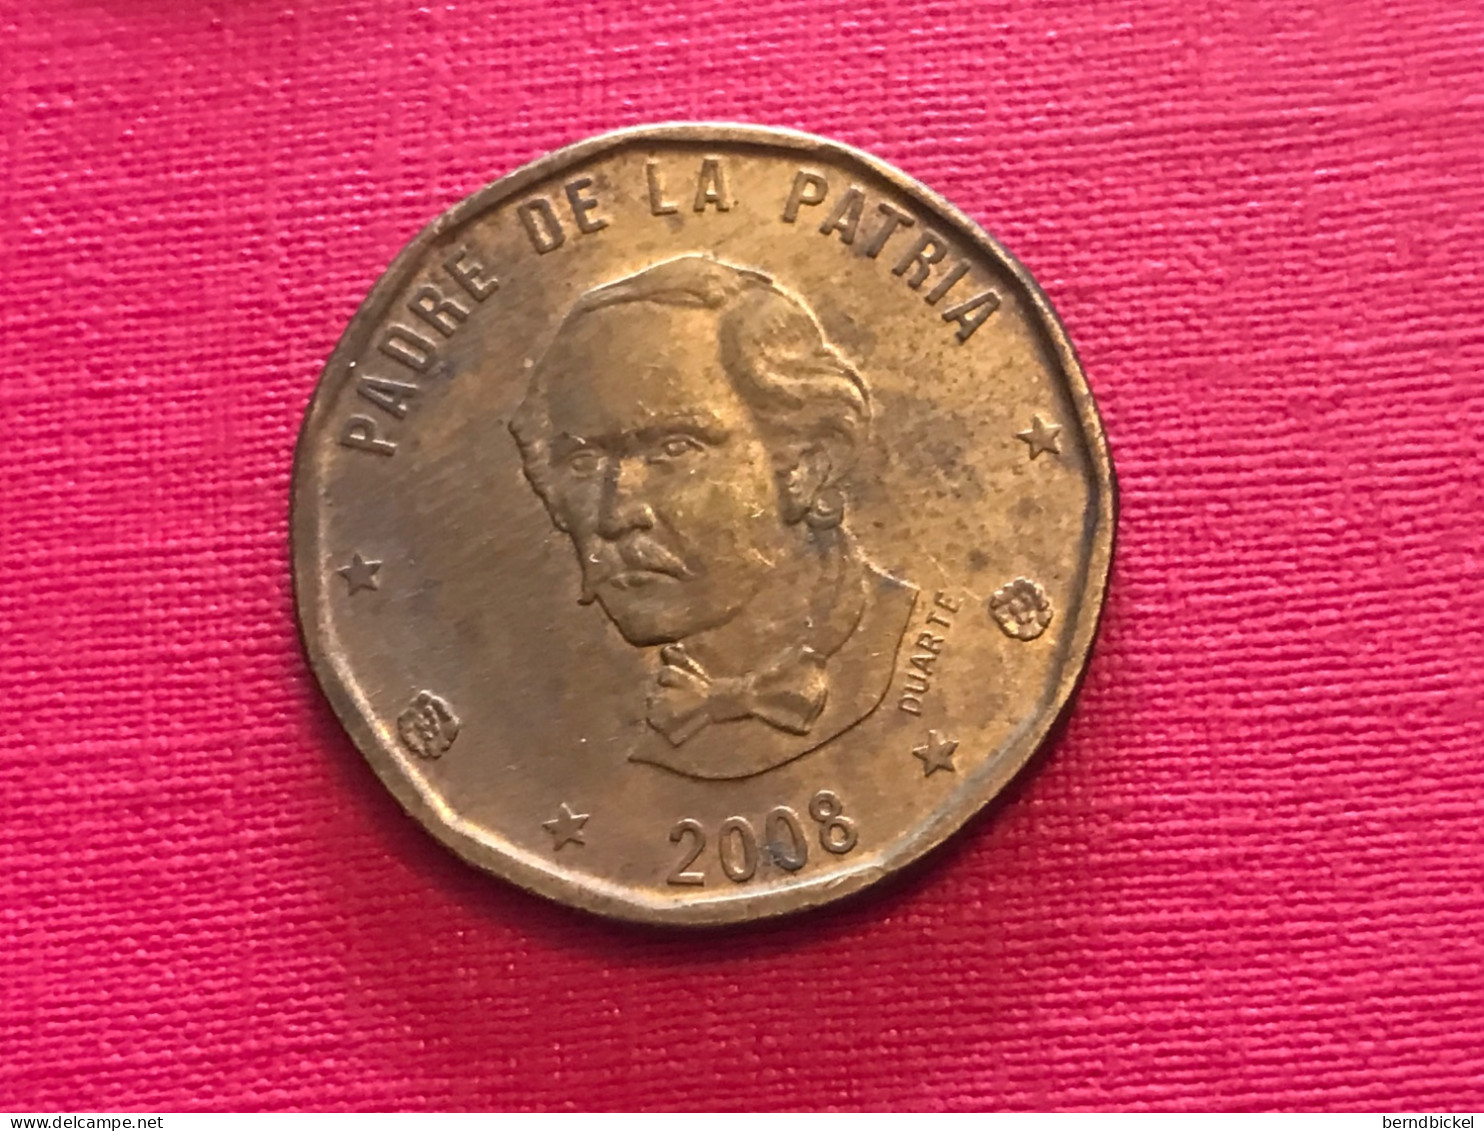 Münze Münzen Umlaufmünze Dominikanische Republik 1 Peso 2008 - Dominicana